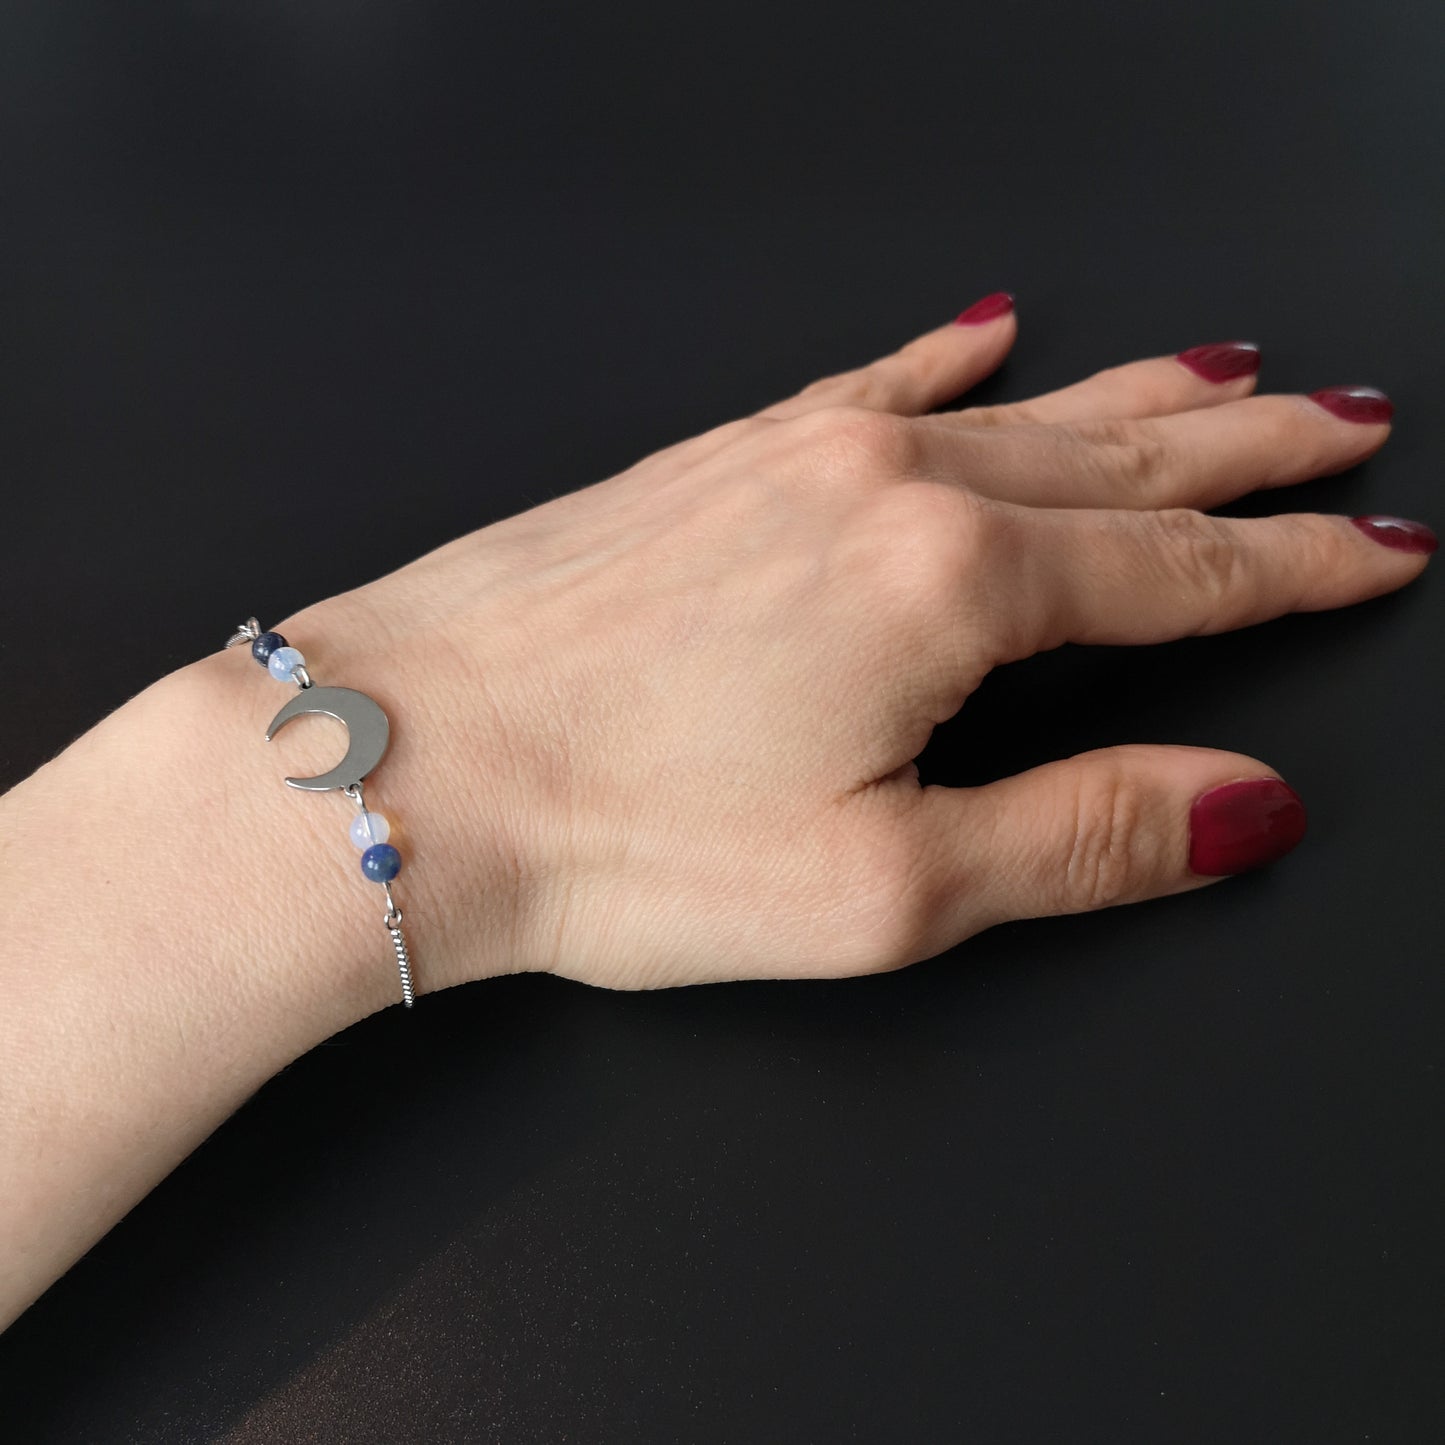 Lapis lazuli, opalite and crescent Moon stainless steel slider bracelet Baguette Magick